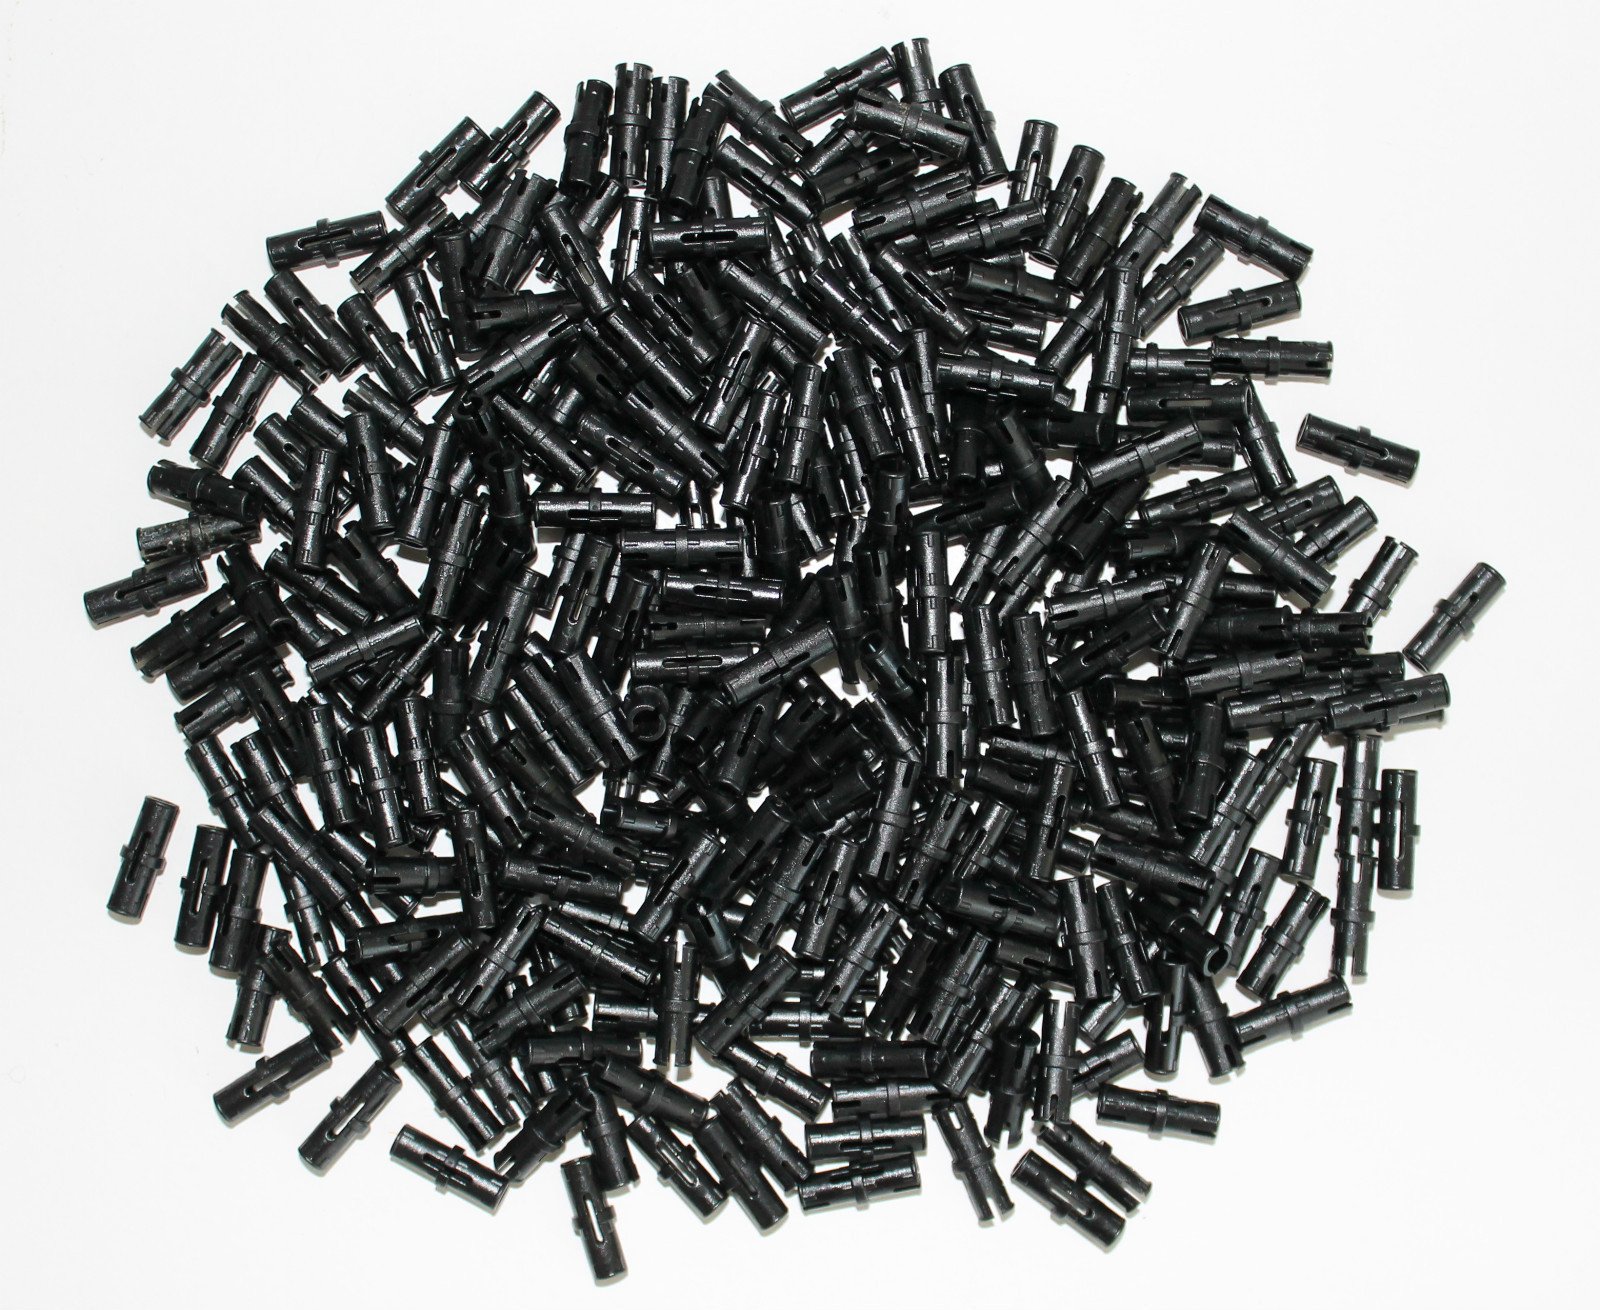 LEGO Technic Mindstorm NXT Black Friction Pin Connector Part 2780 (Quantity 300)